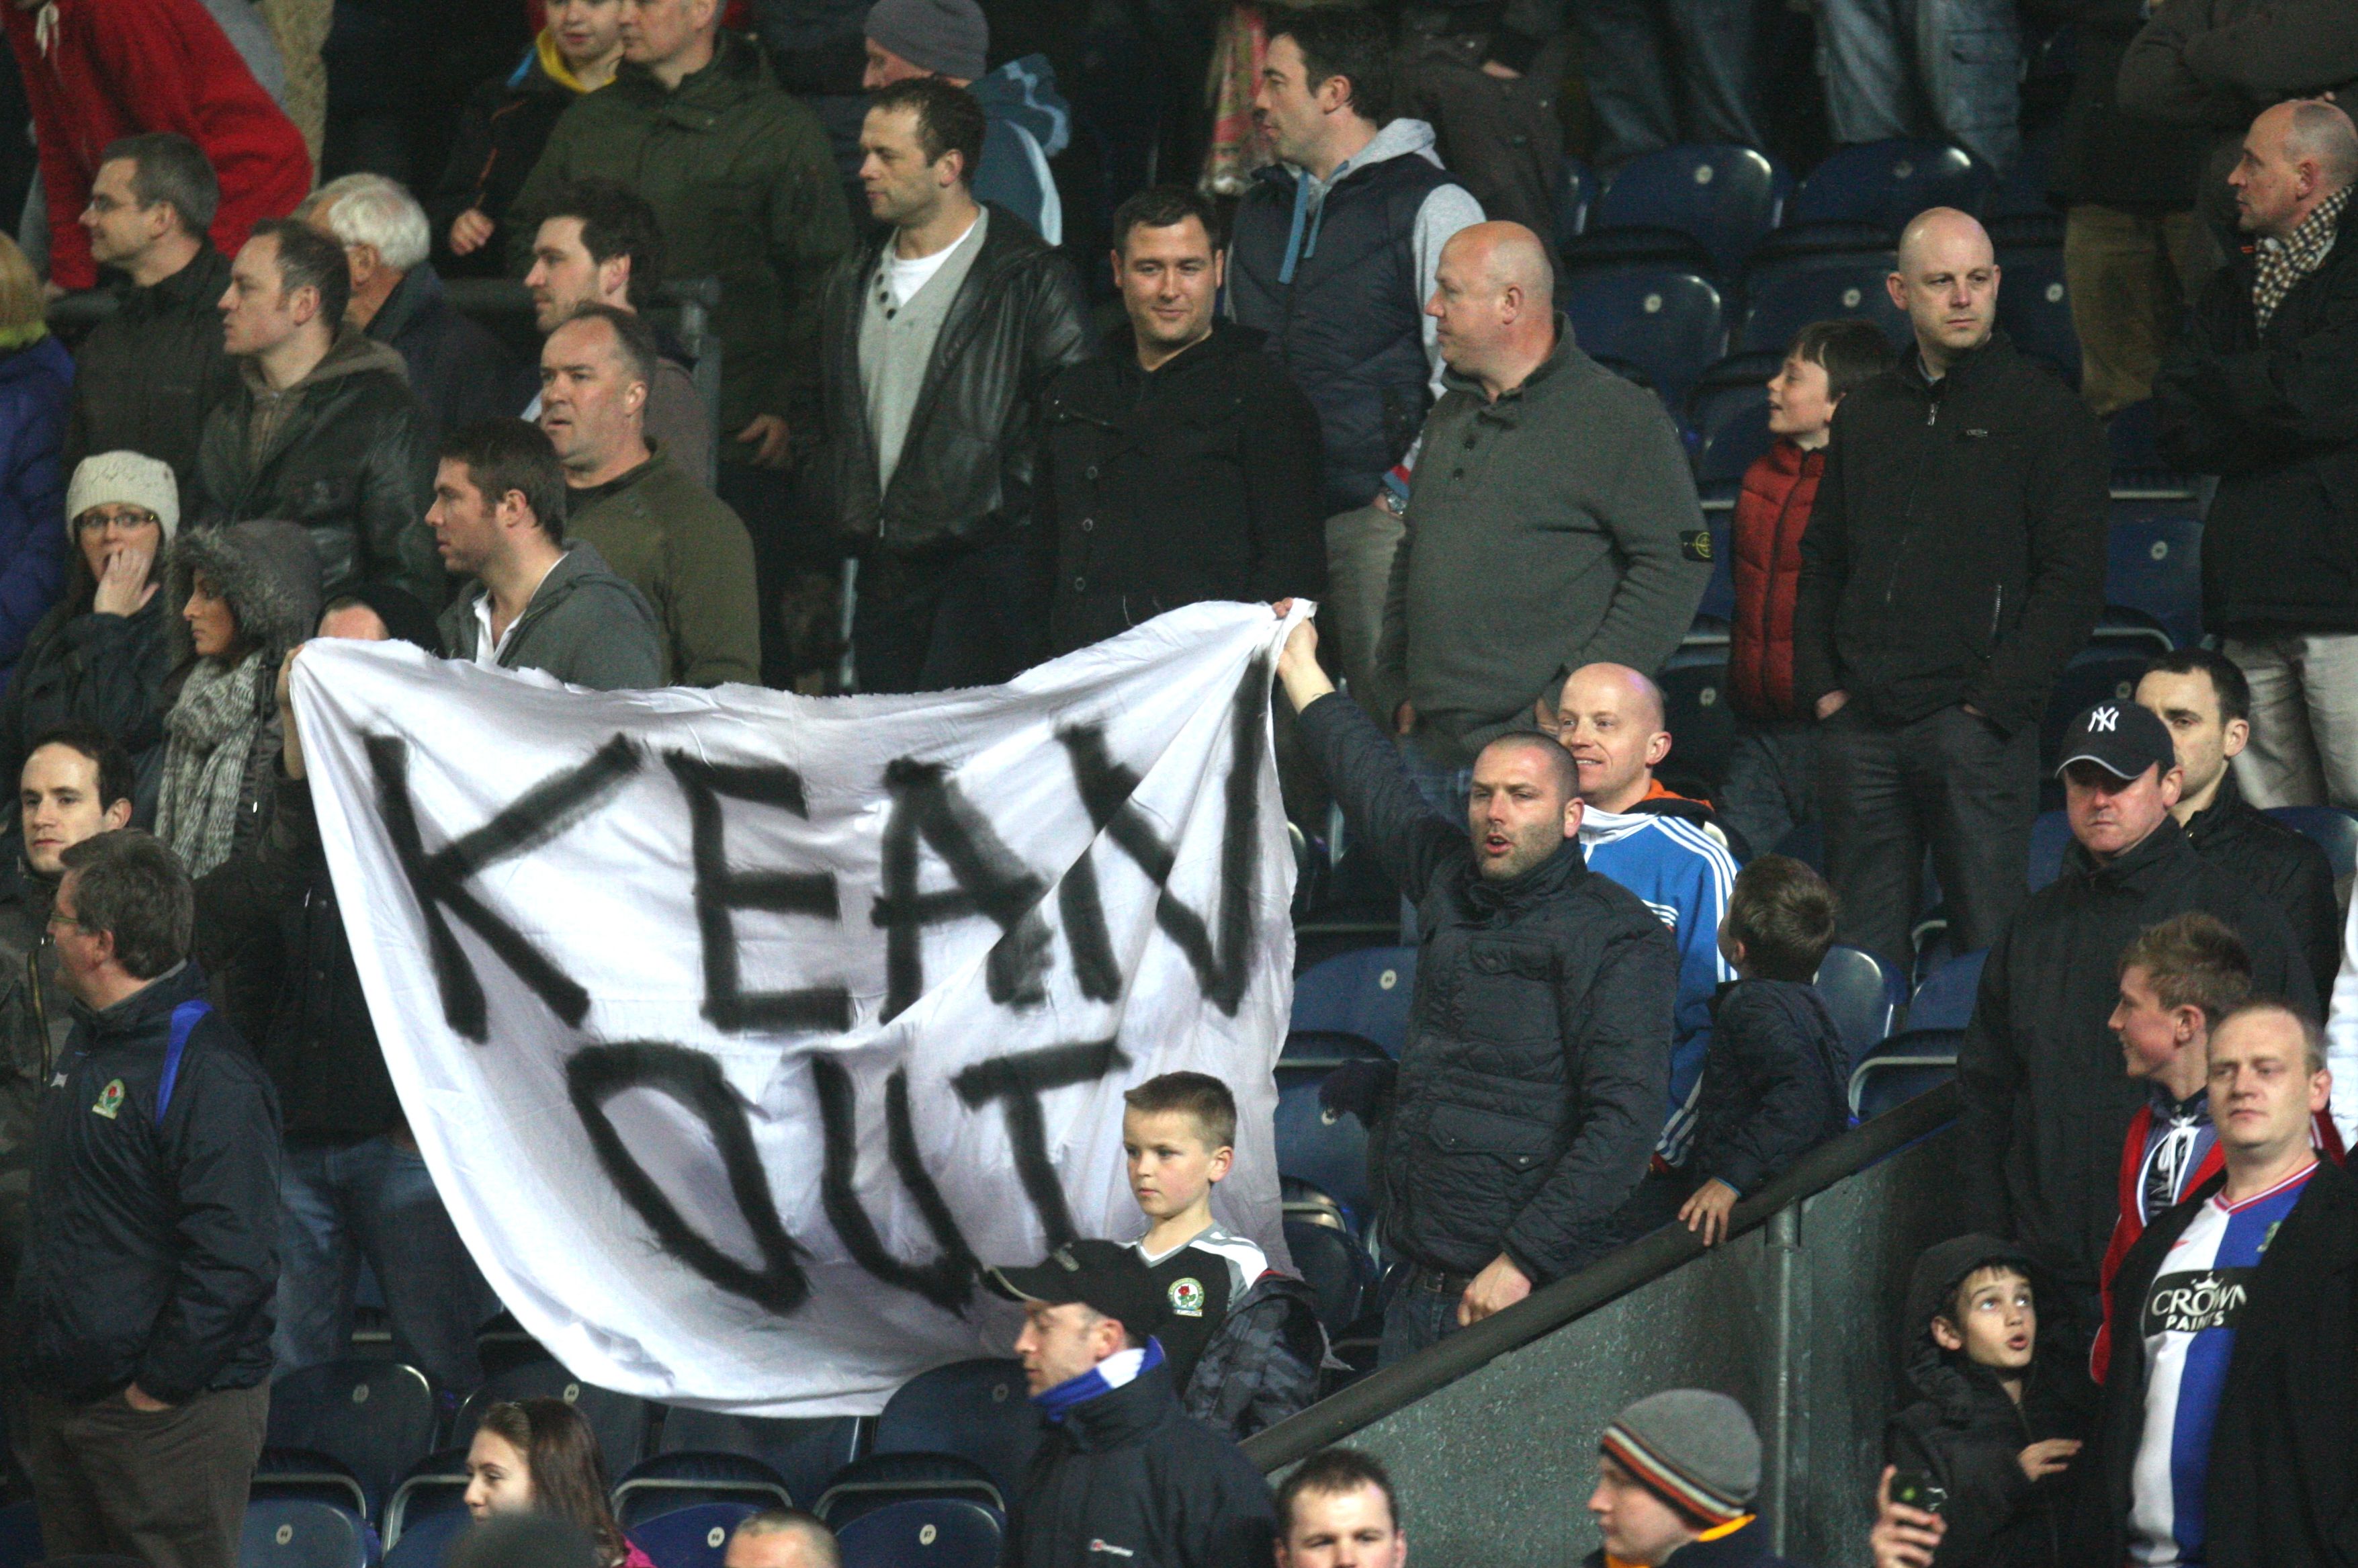 Blackburn fans holding a 'Kean Out' banner